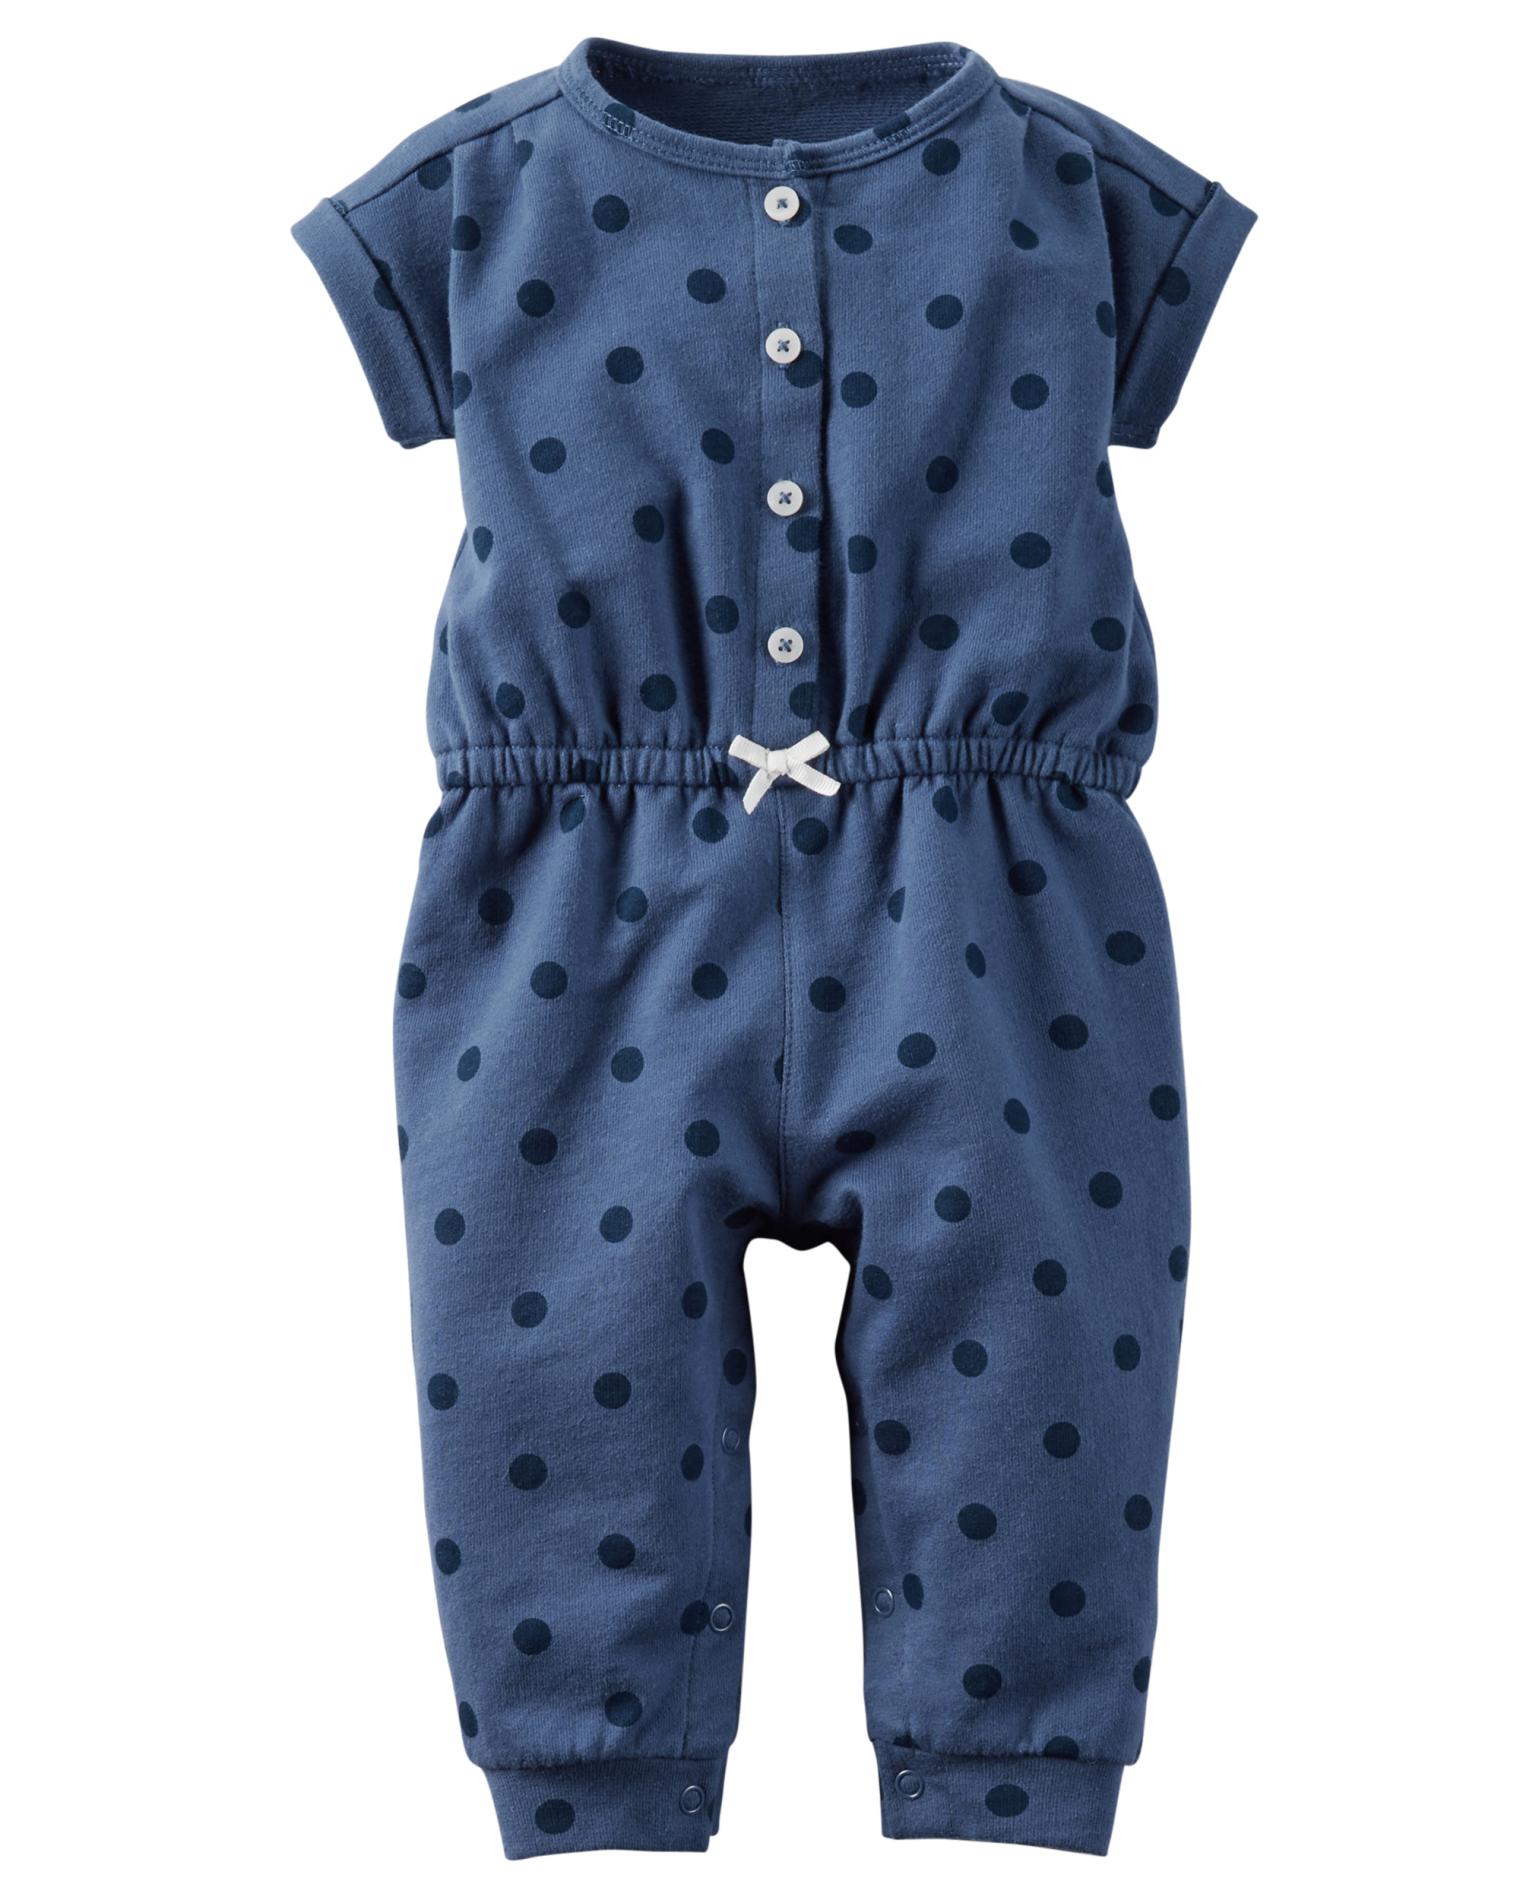 Carter's Newborn & Infant Girls' Jumpsuit - Polka Dot